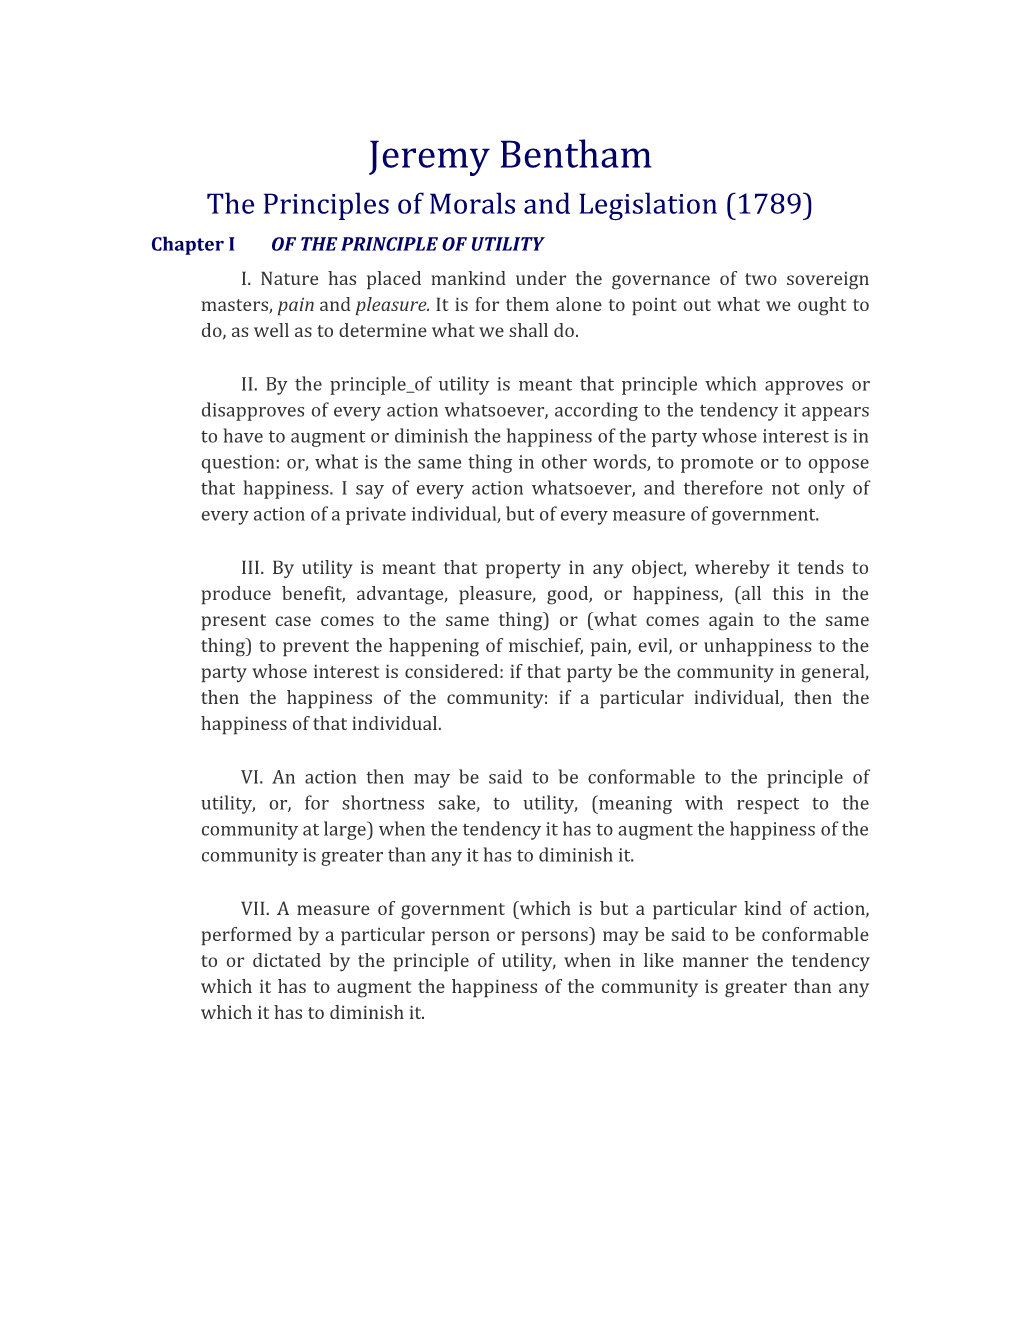 The Principles of Morals and Legislation (1789)